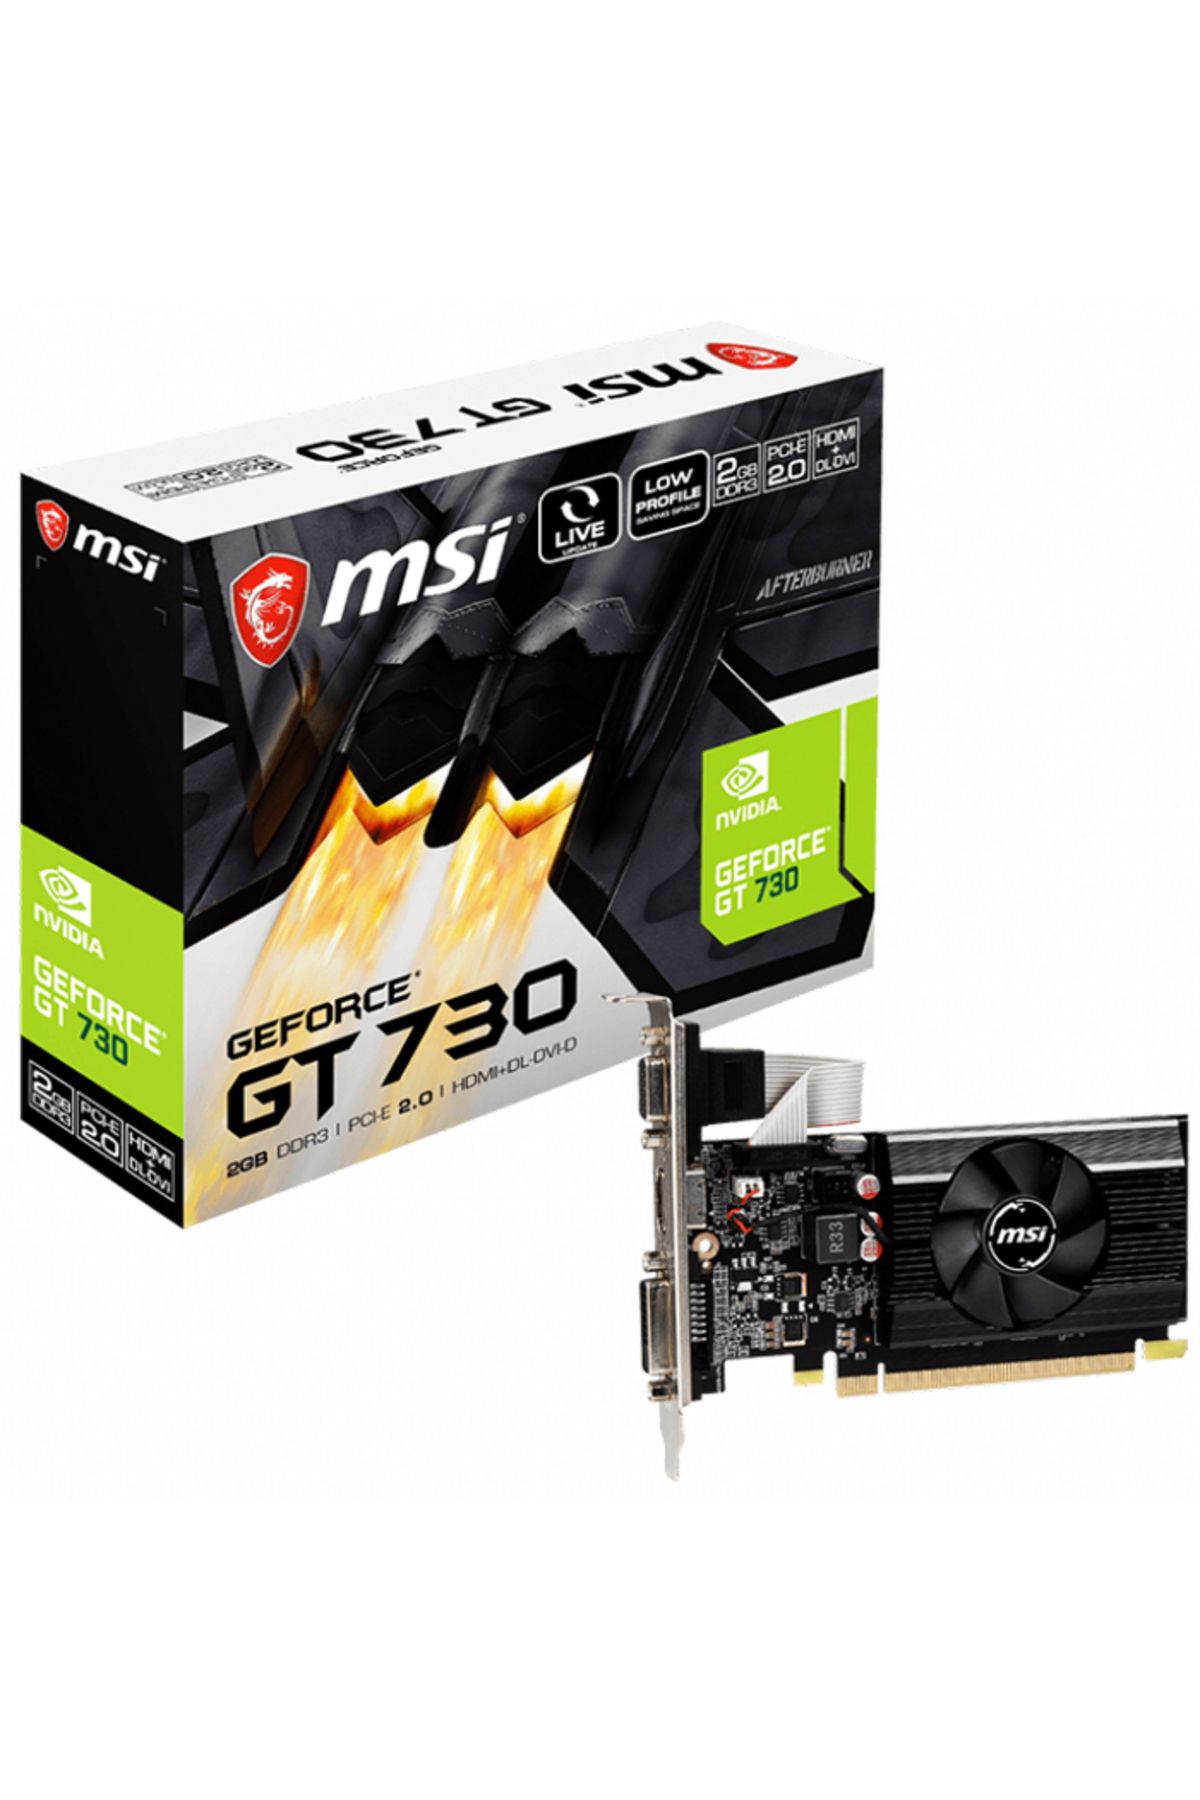 MSI Geforce Gt 730 N730k-2gd3/lp 2gb Ddr3 64bit Dx12 Gaming (OYUNCU) Ekran Kartı